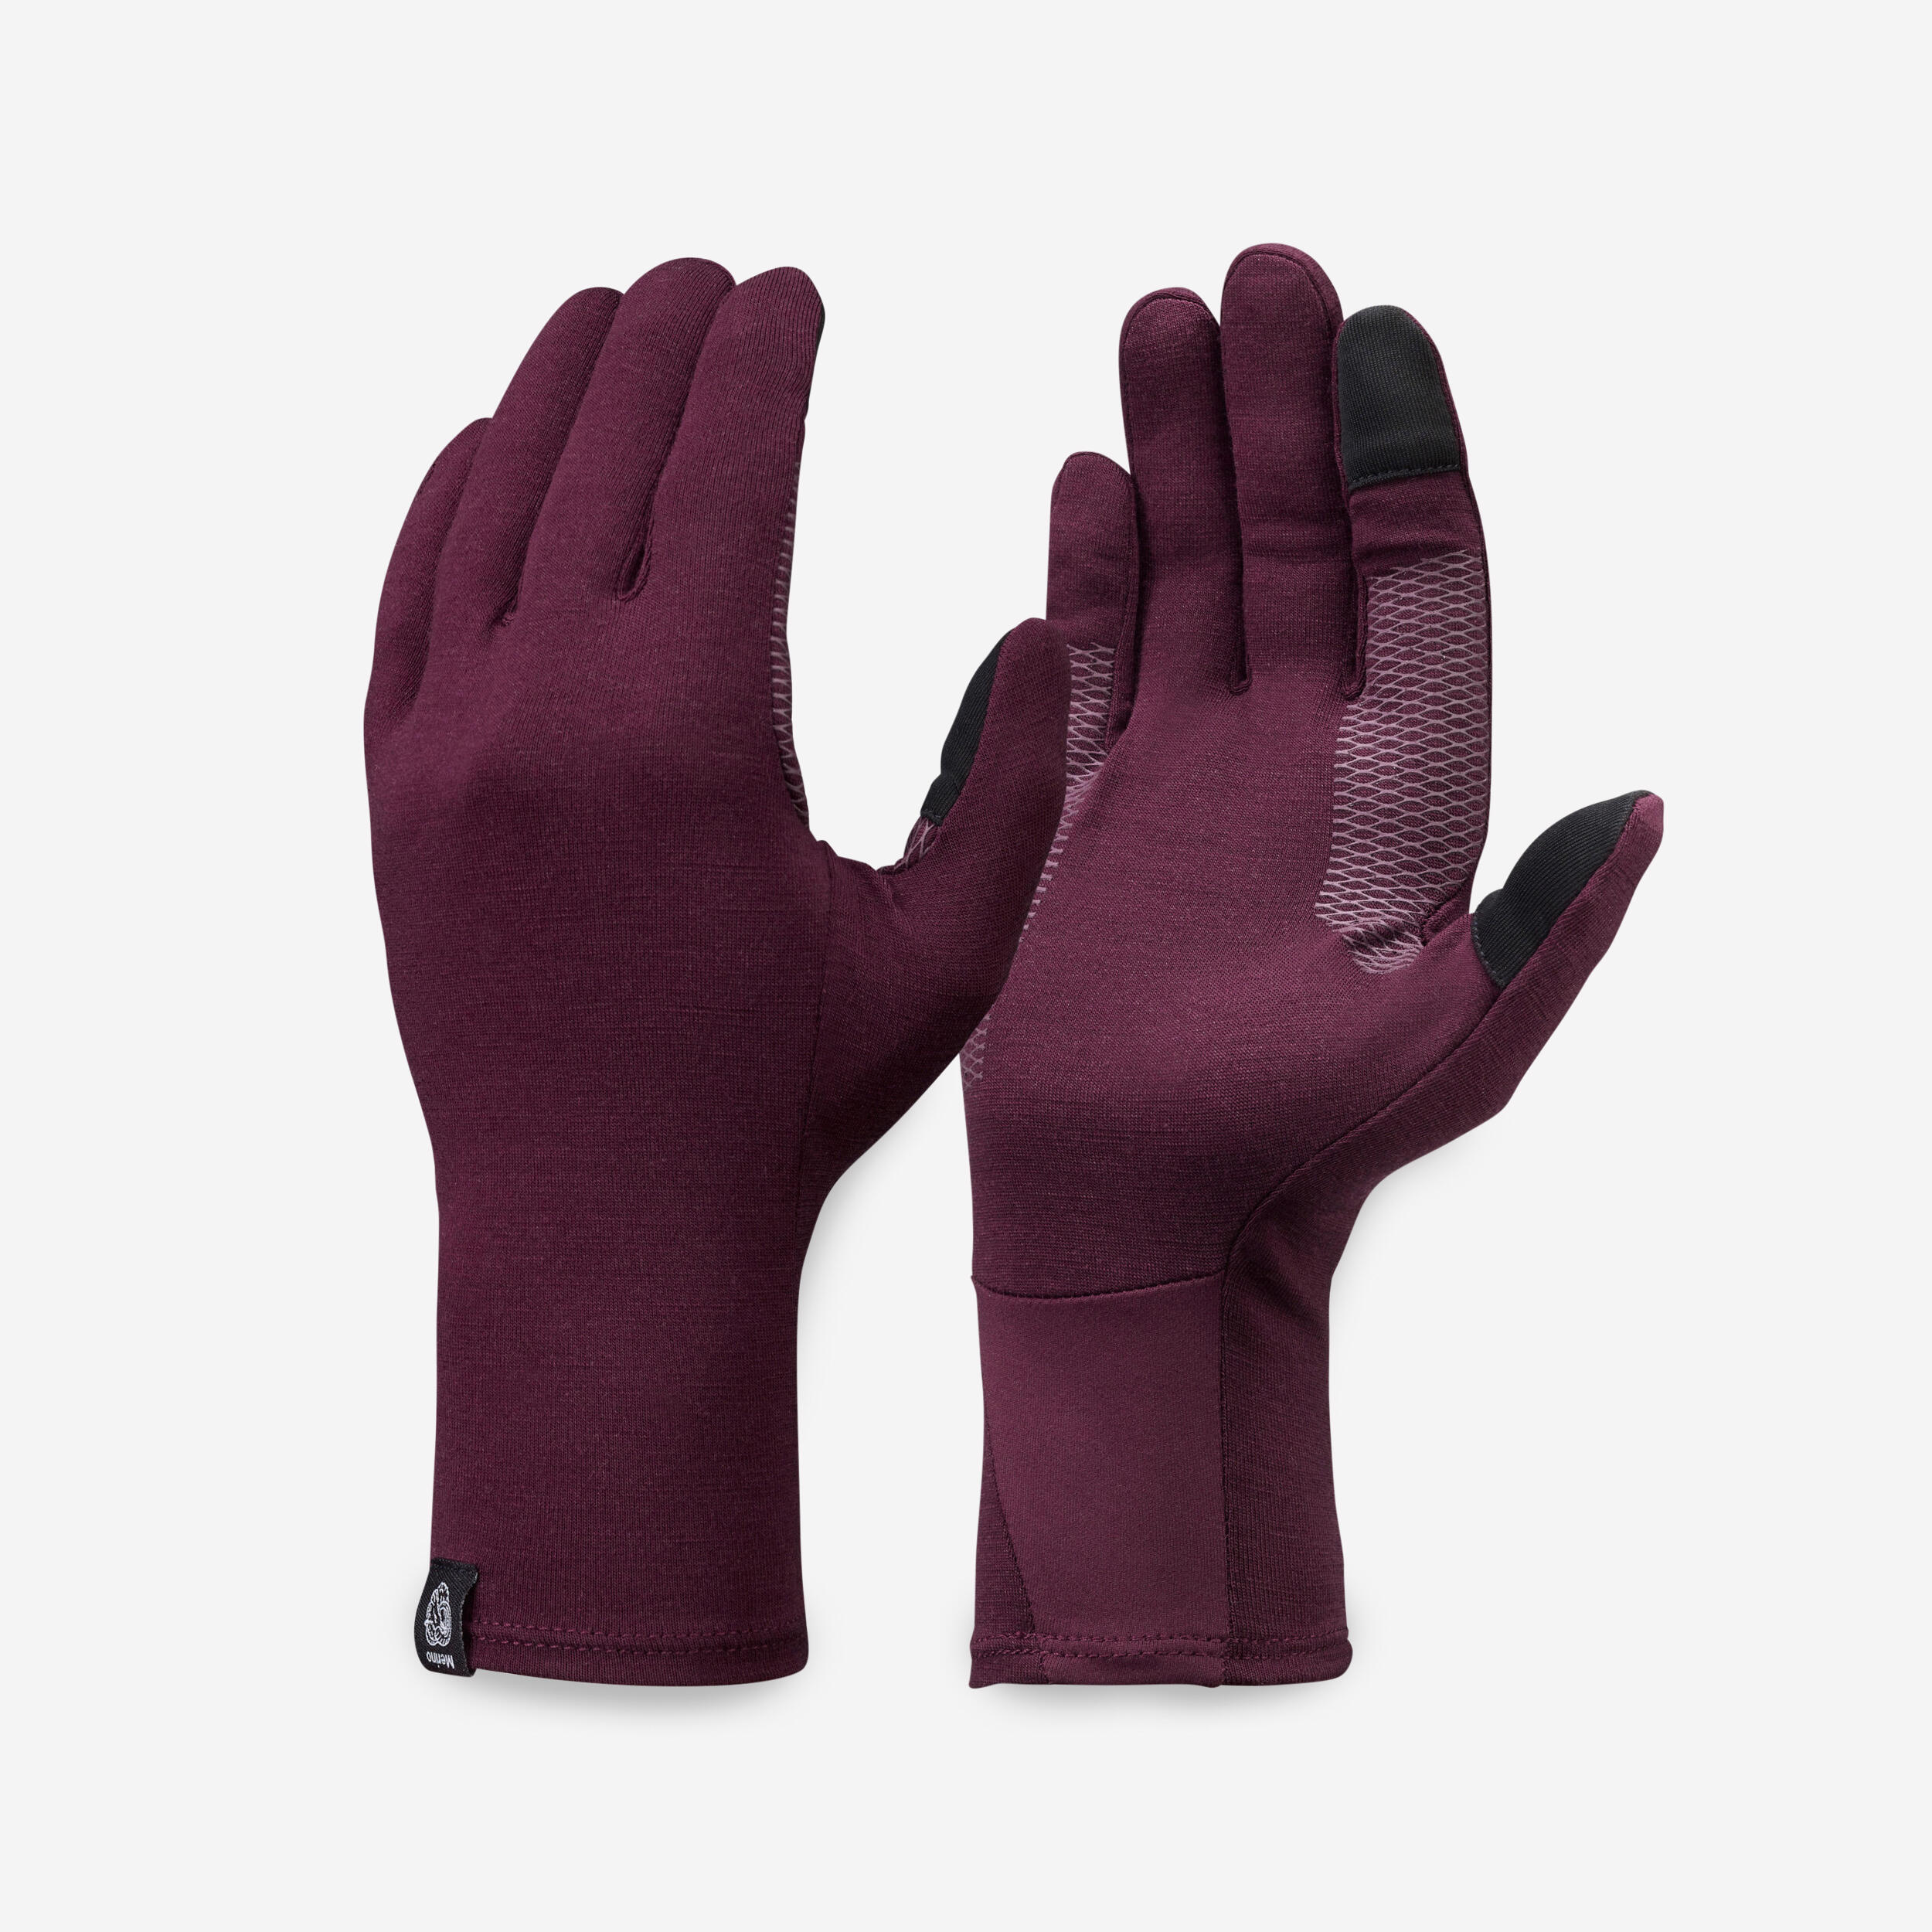 Forclaz Adult Mountain Trekking Merino Wool Liner Gloves - MT500 Burgundy